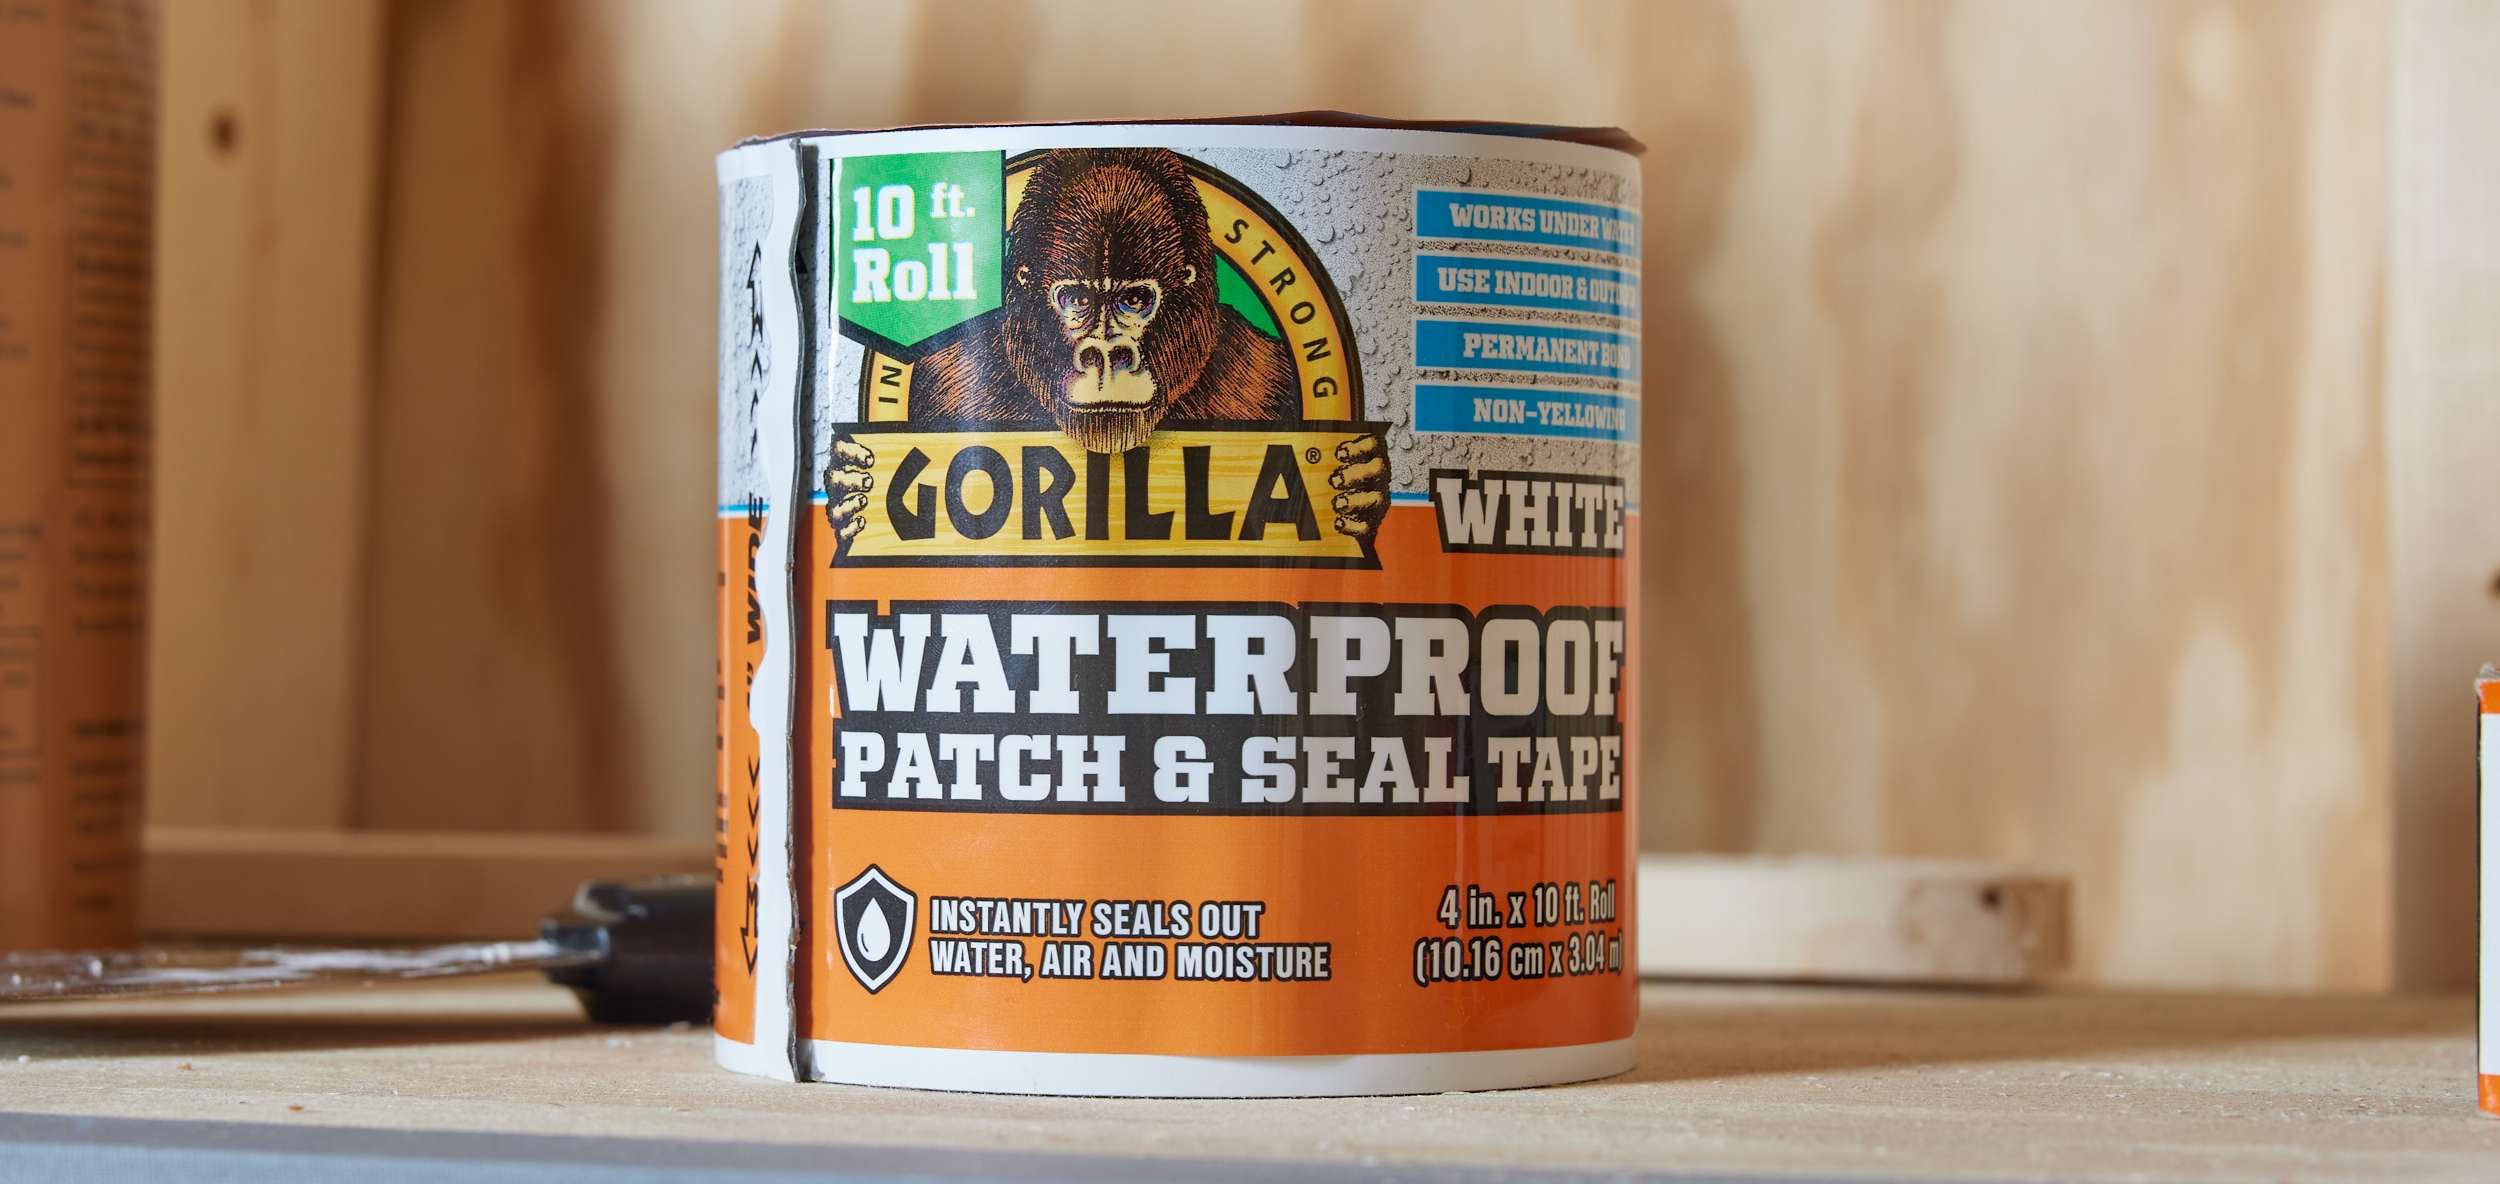 Gorilla Waterproof Patch & Seal Tape Clear